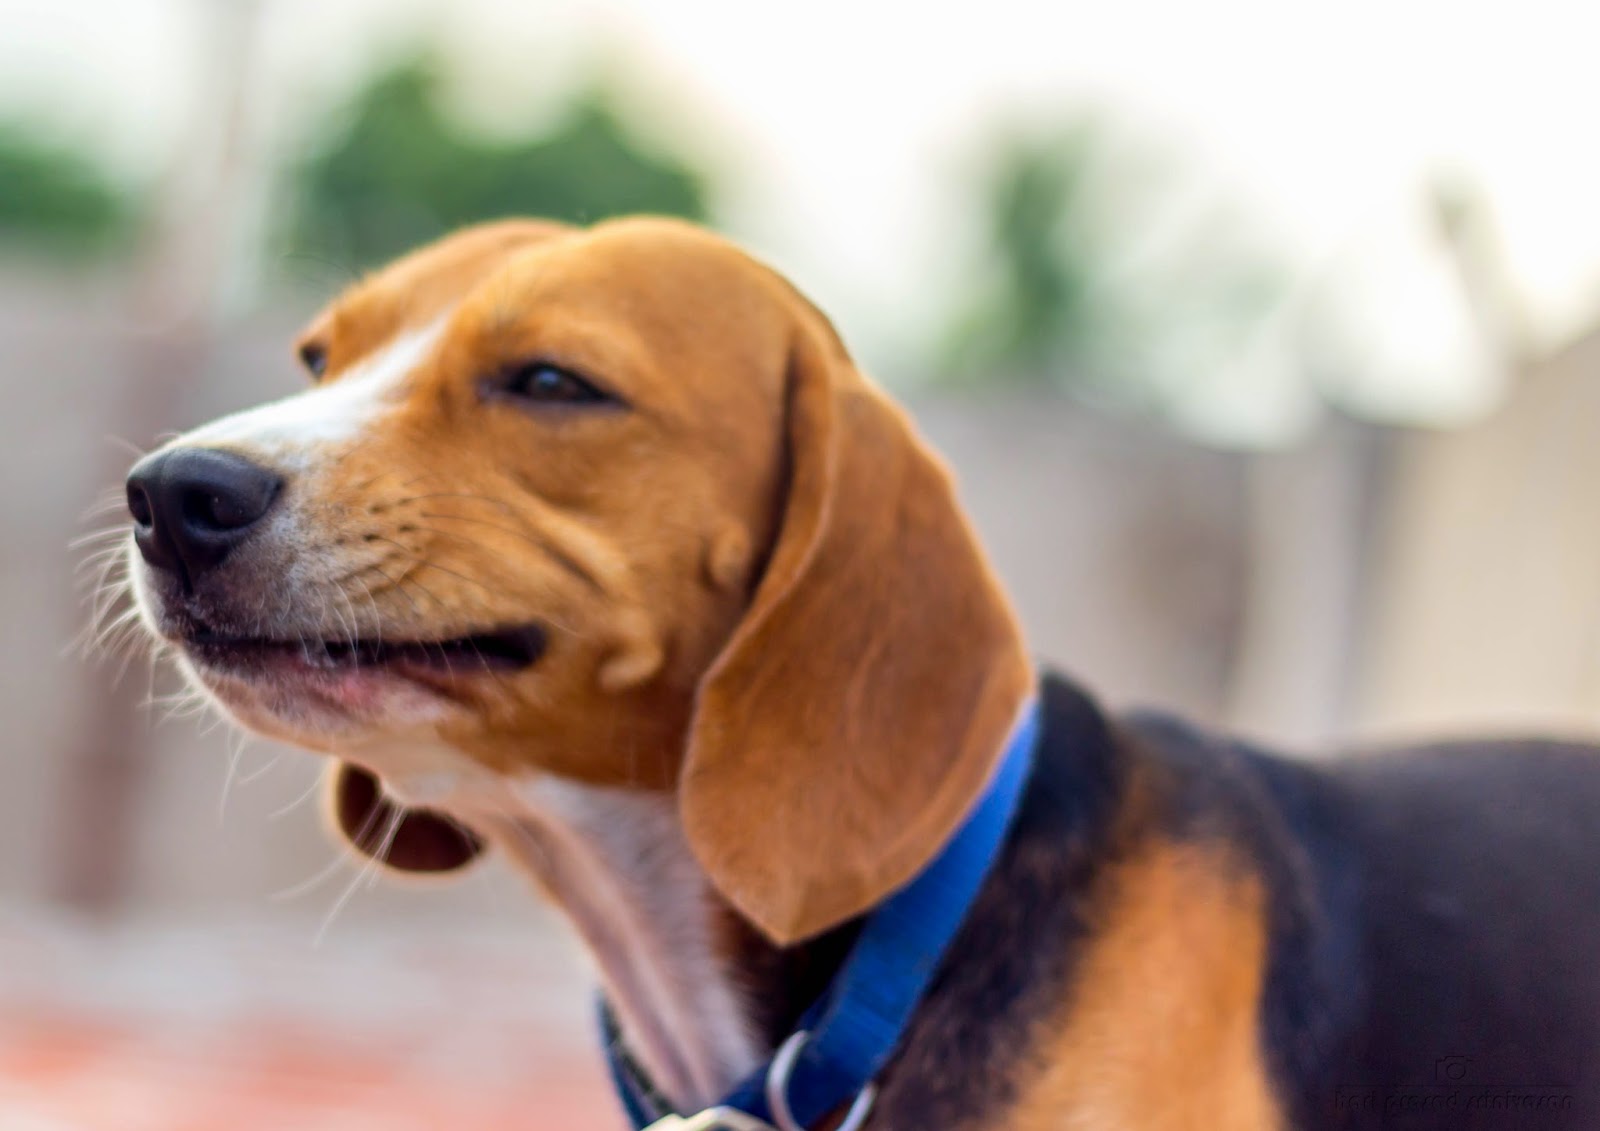 Beagle biting its food photo